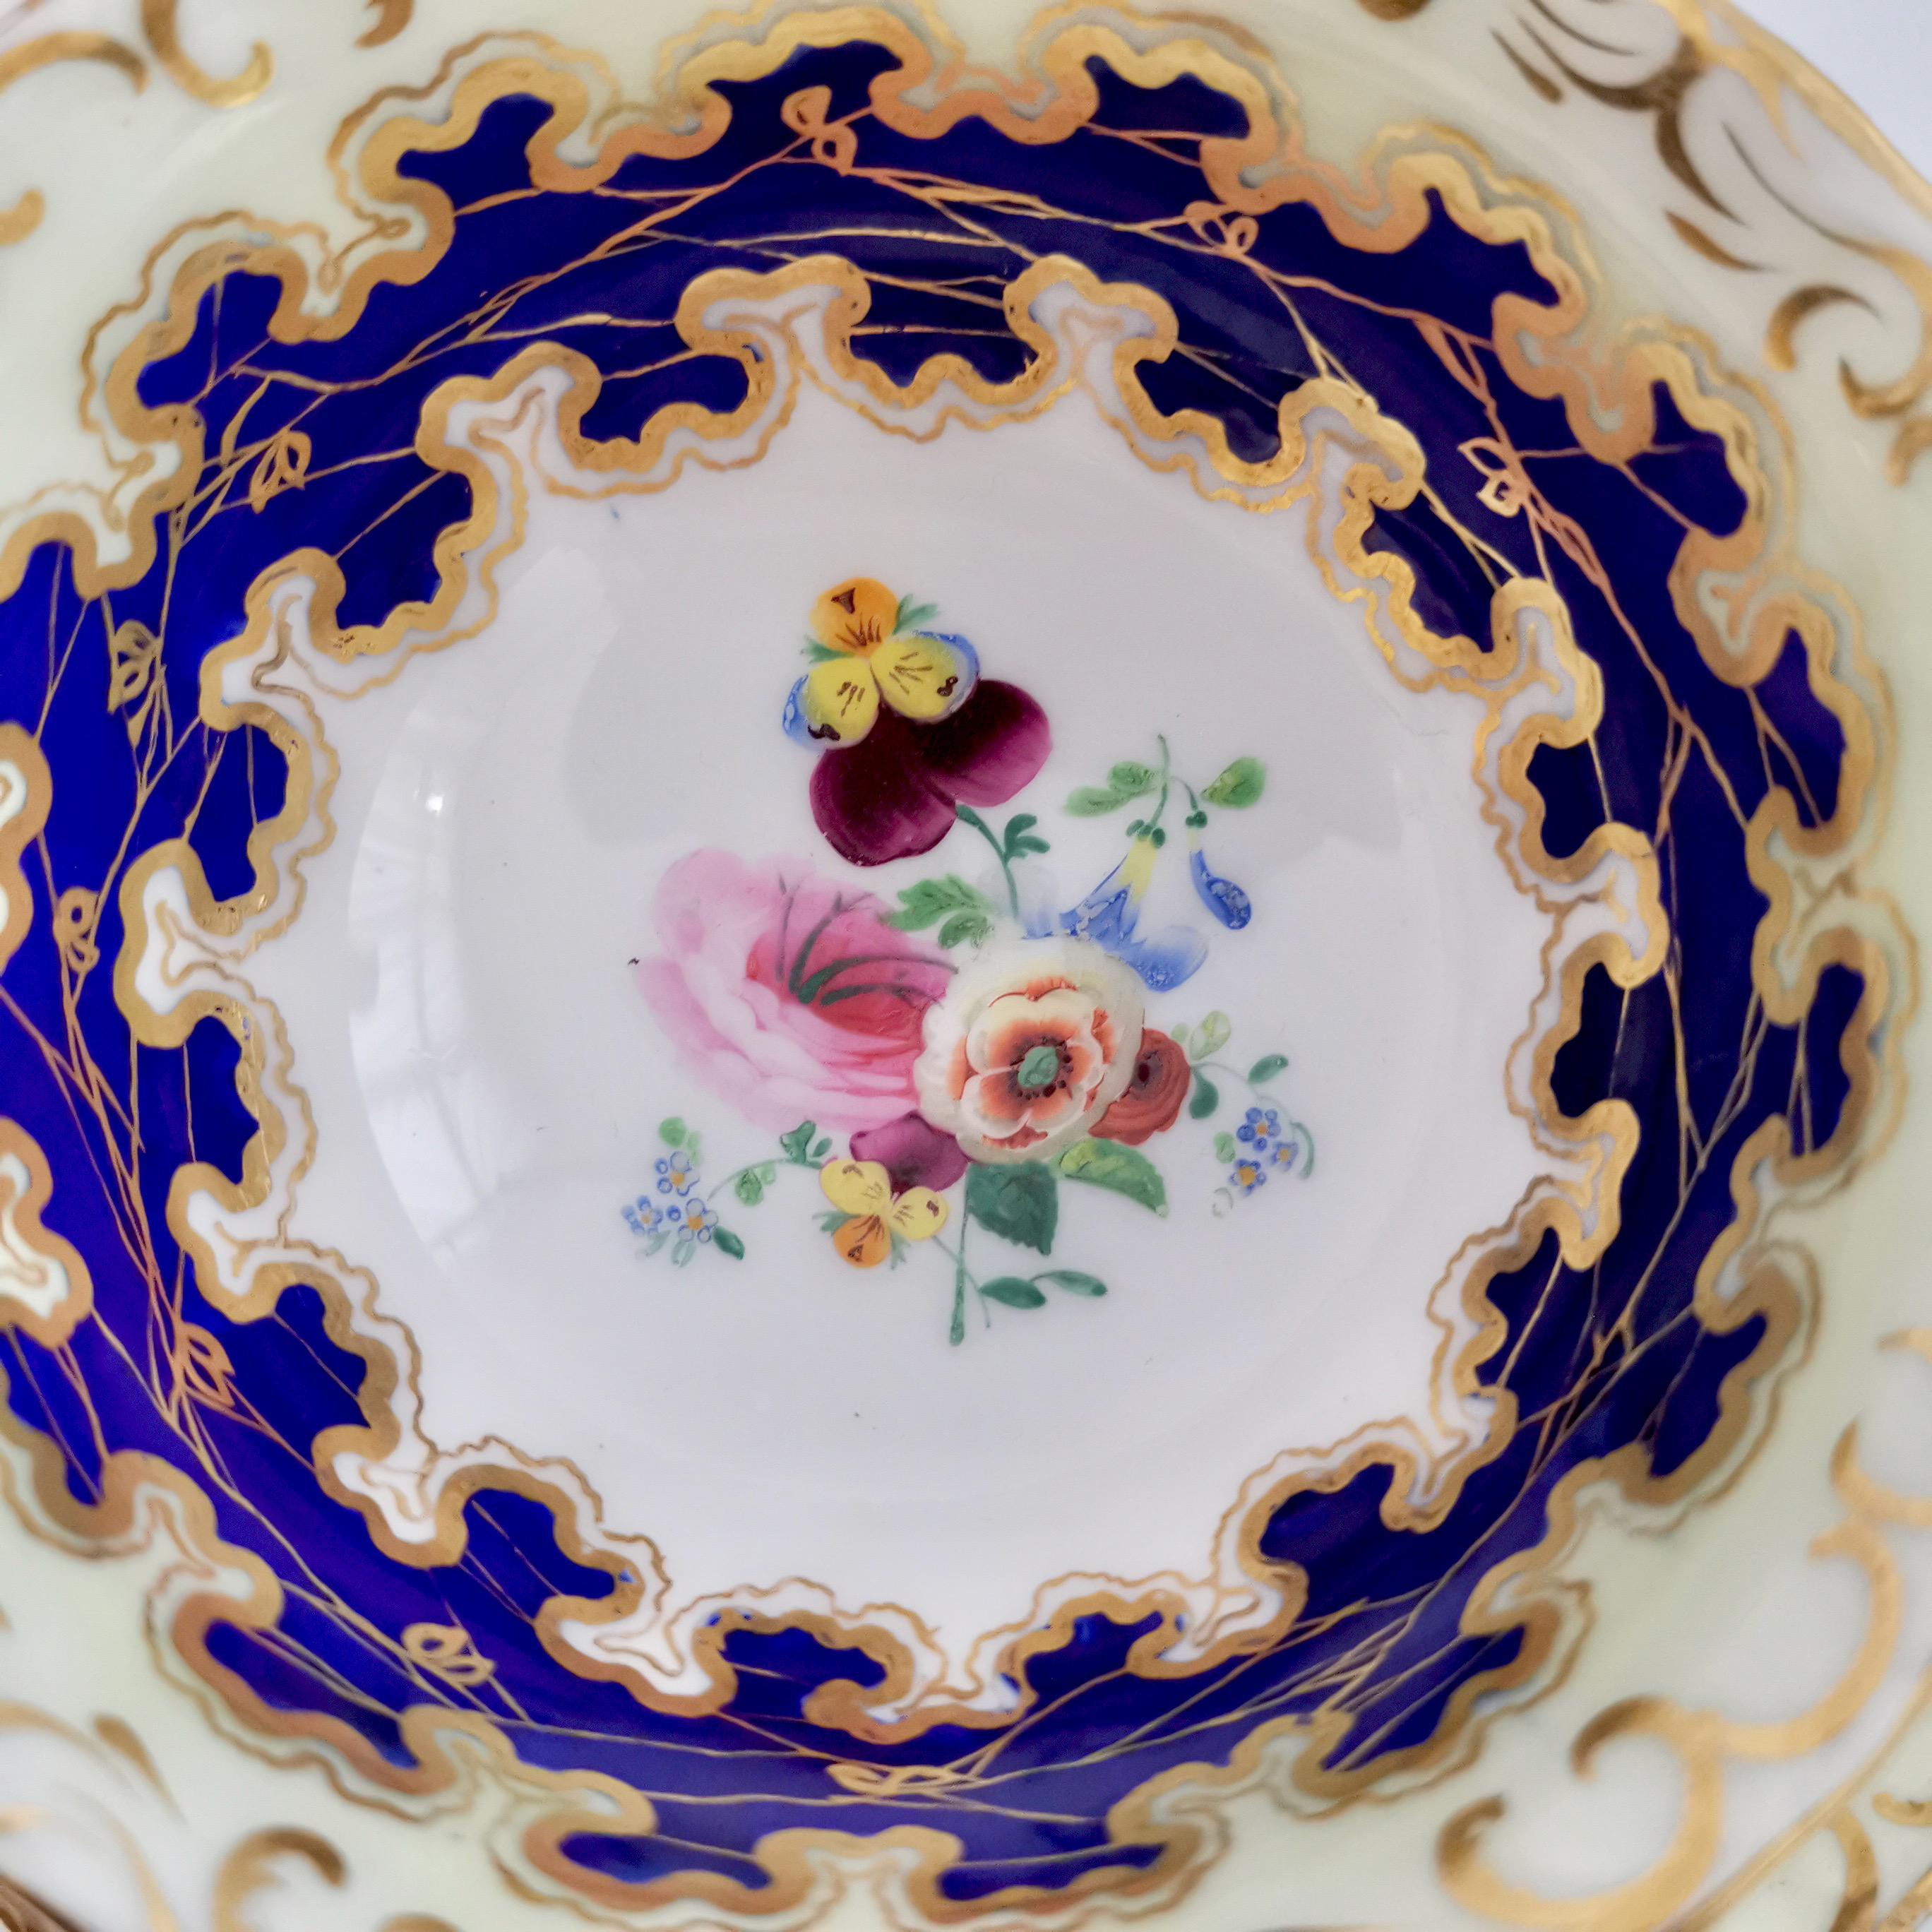 Hand-Painted Grainger Worcester Porcelain Teacup, Cobalt Blue, Gilt and Flowers, circa 1840